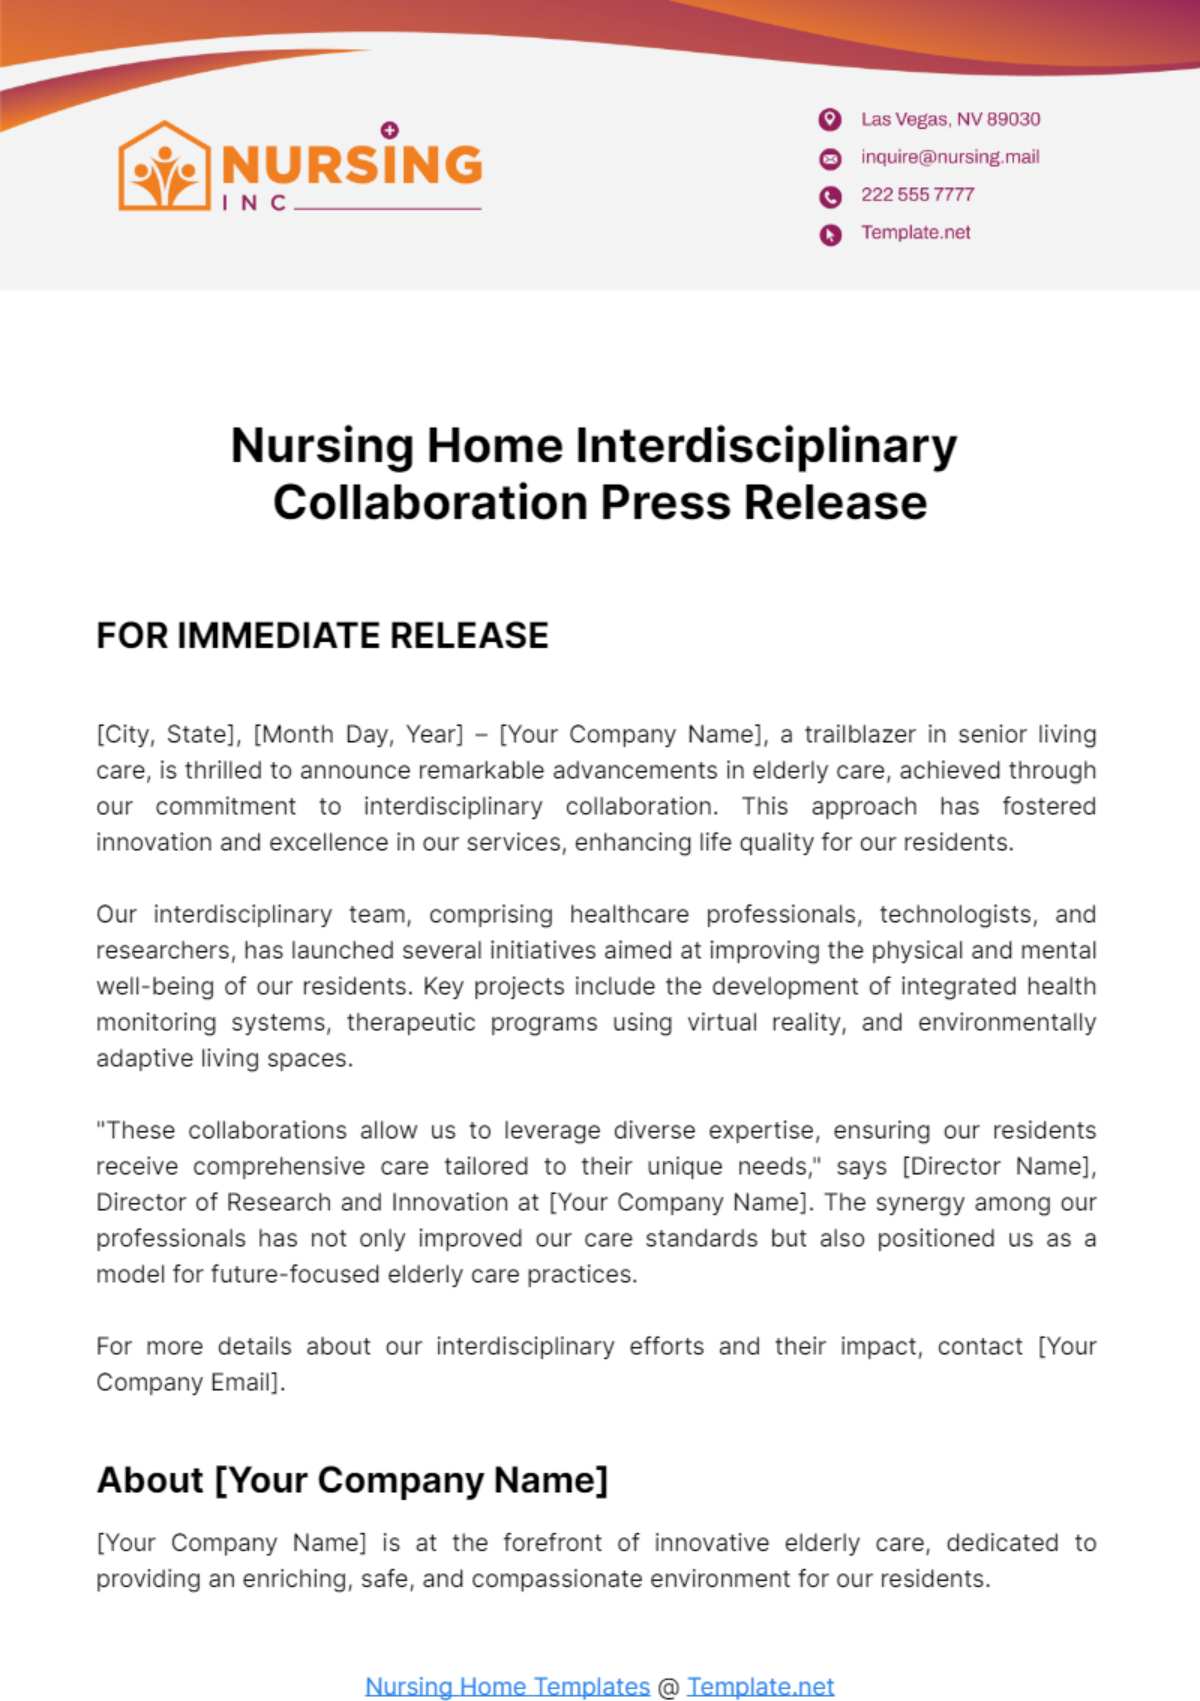 Nursing Home Interdisciplinary Collaboration Press Release Template